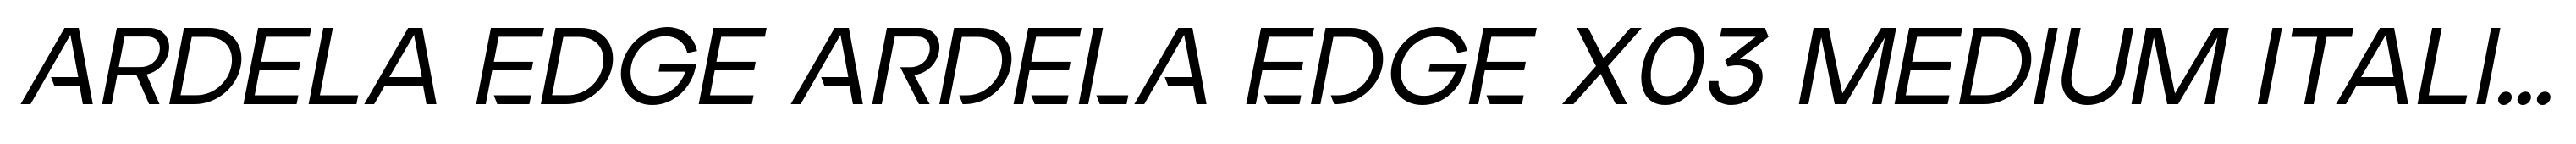 Ardela Edge ARDELA EDGE X03 Medium Italic